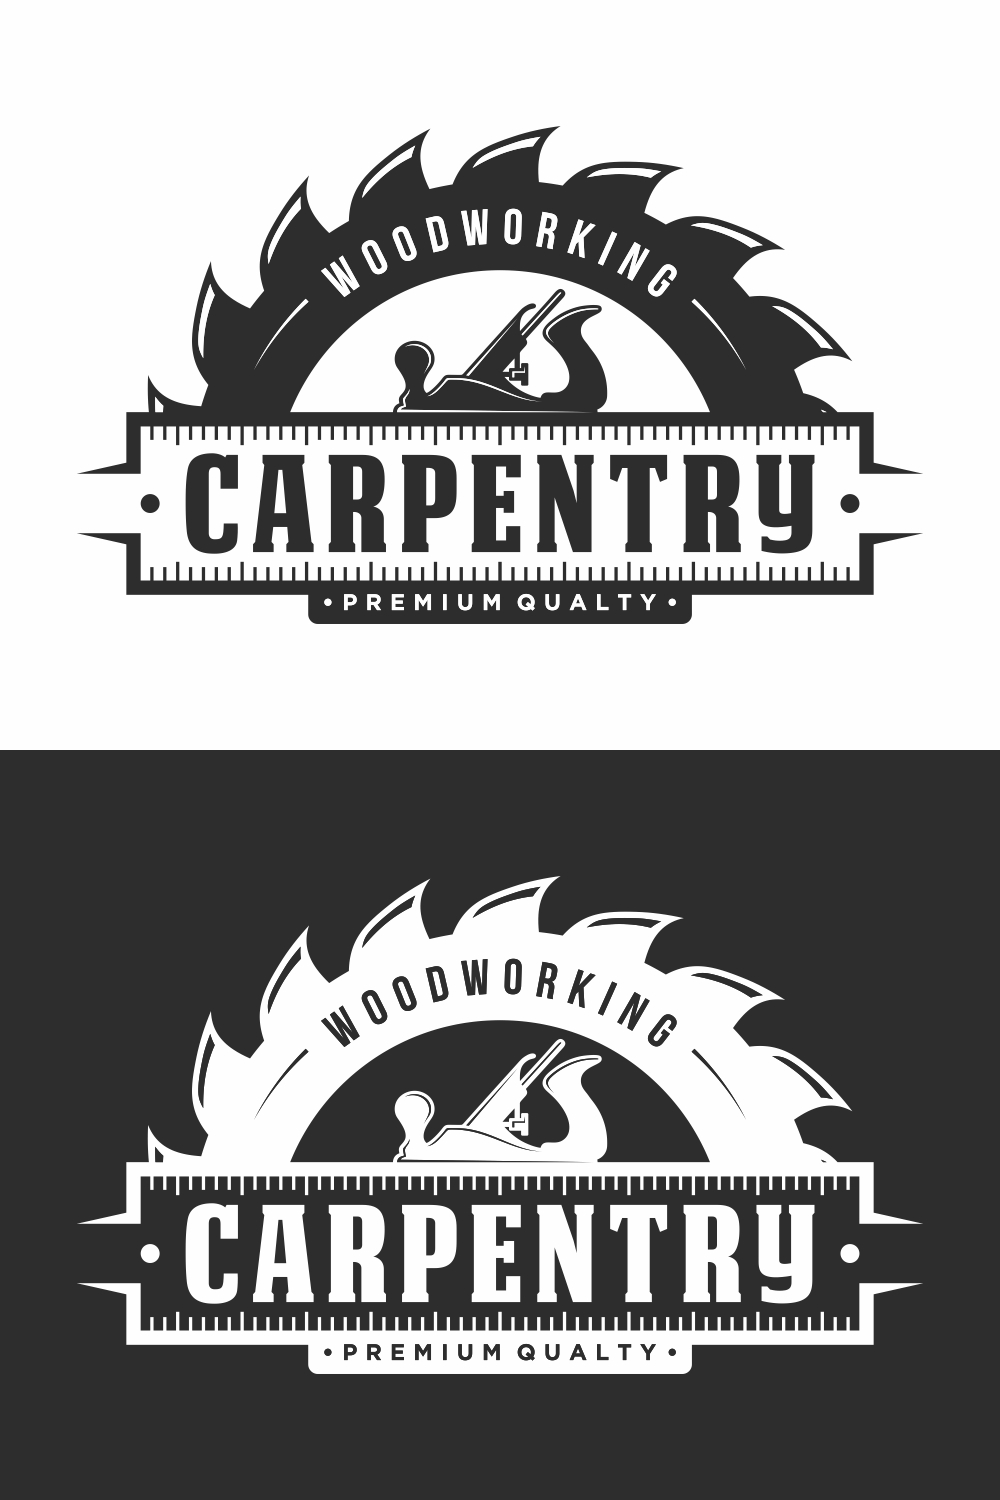 Carpentry vintage logo design template – Only $6 pinterest preview image.